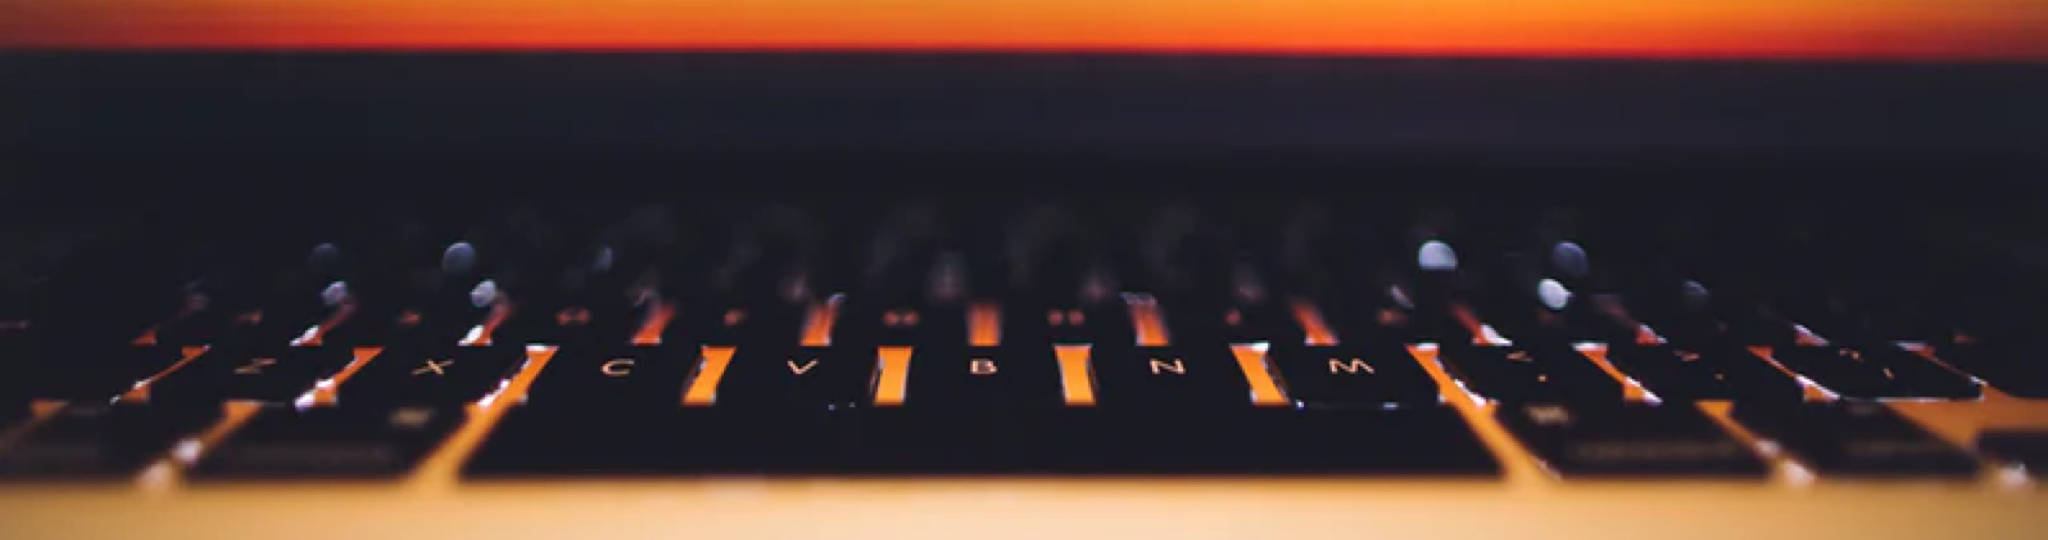 Orange keyboard